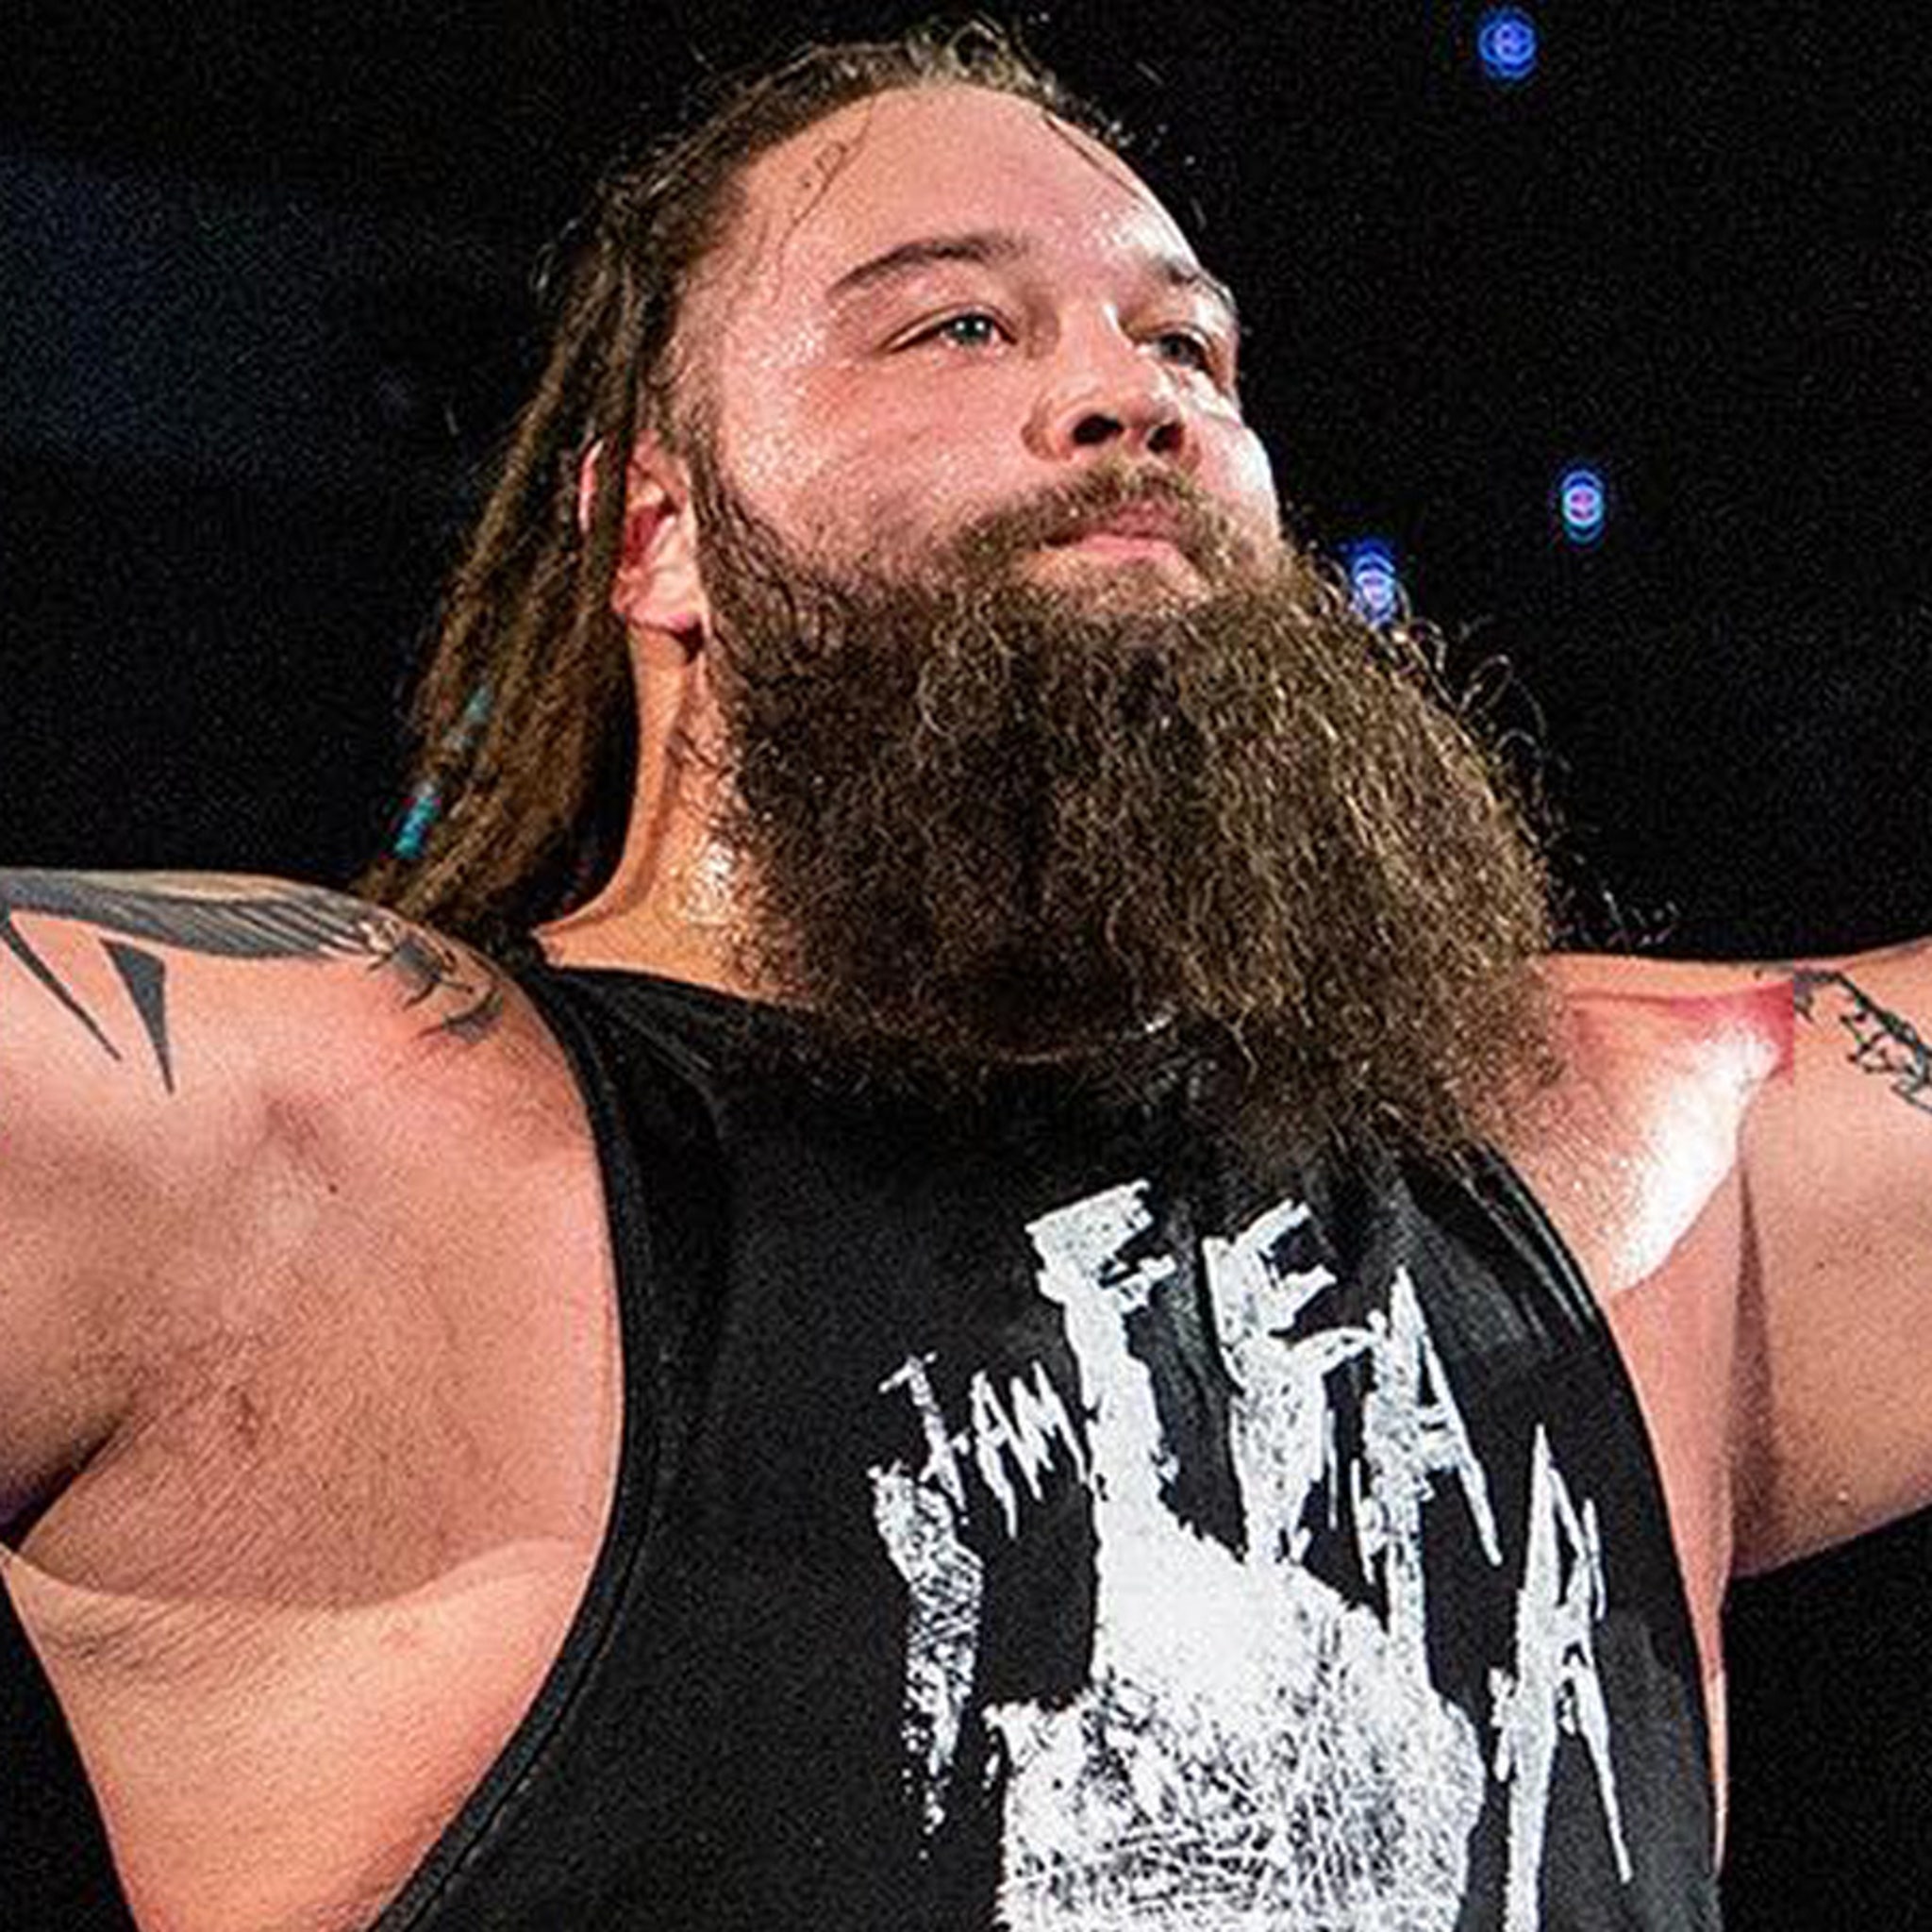 WWE: WWE & Rotunda Family Launch New Bray Wyatt Merch Collection